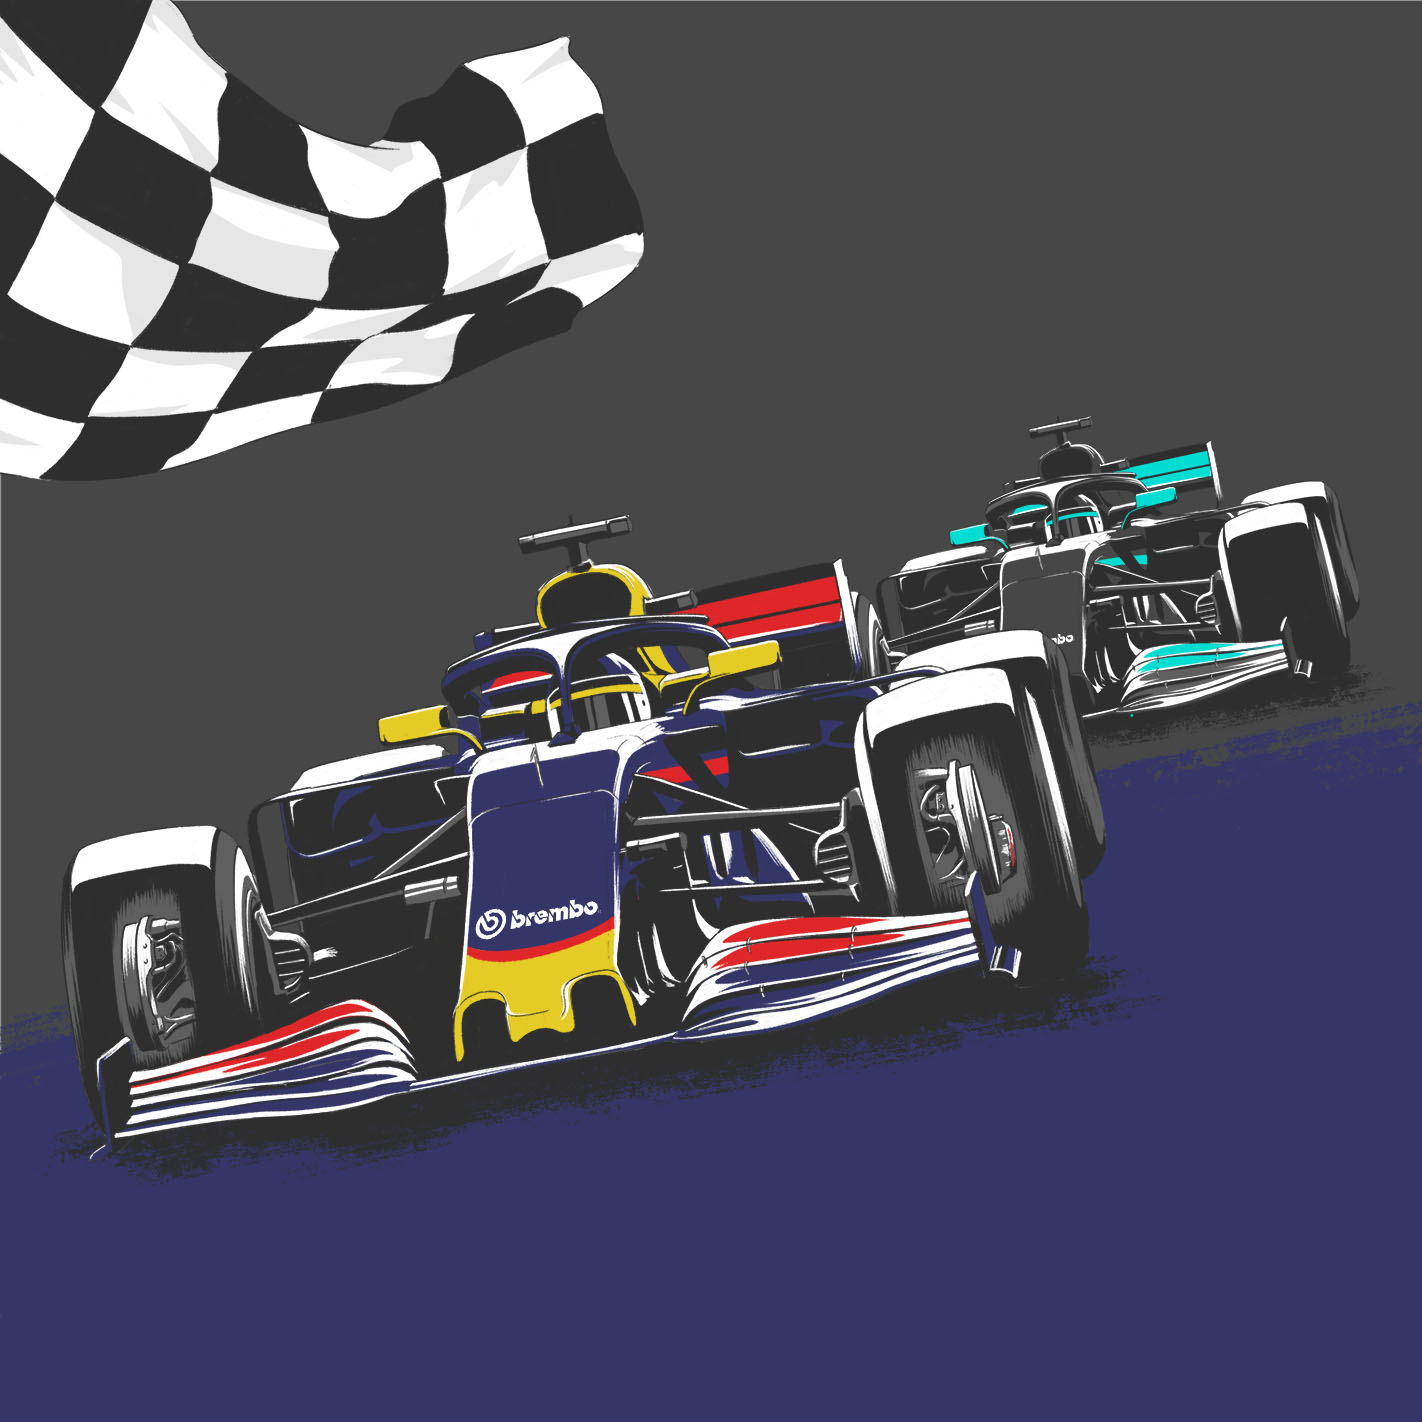 General 1422x1422 Brembo racing illustration Formula 1